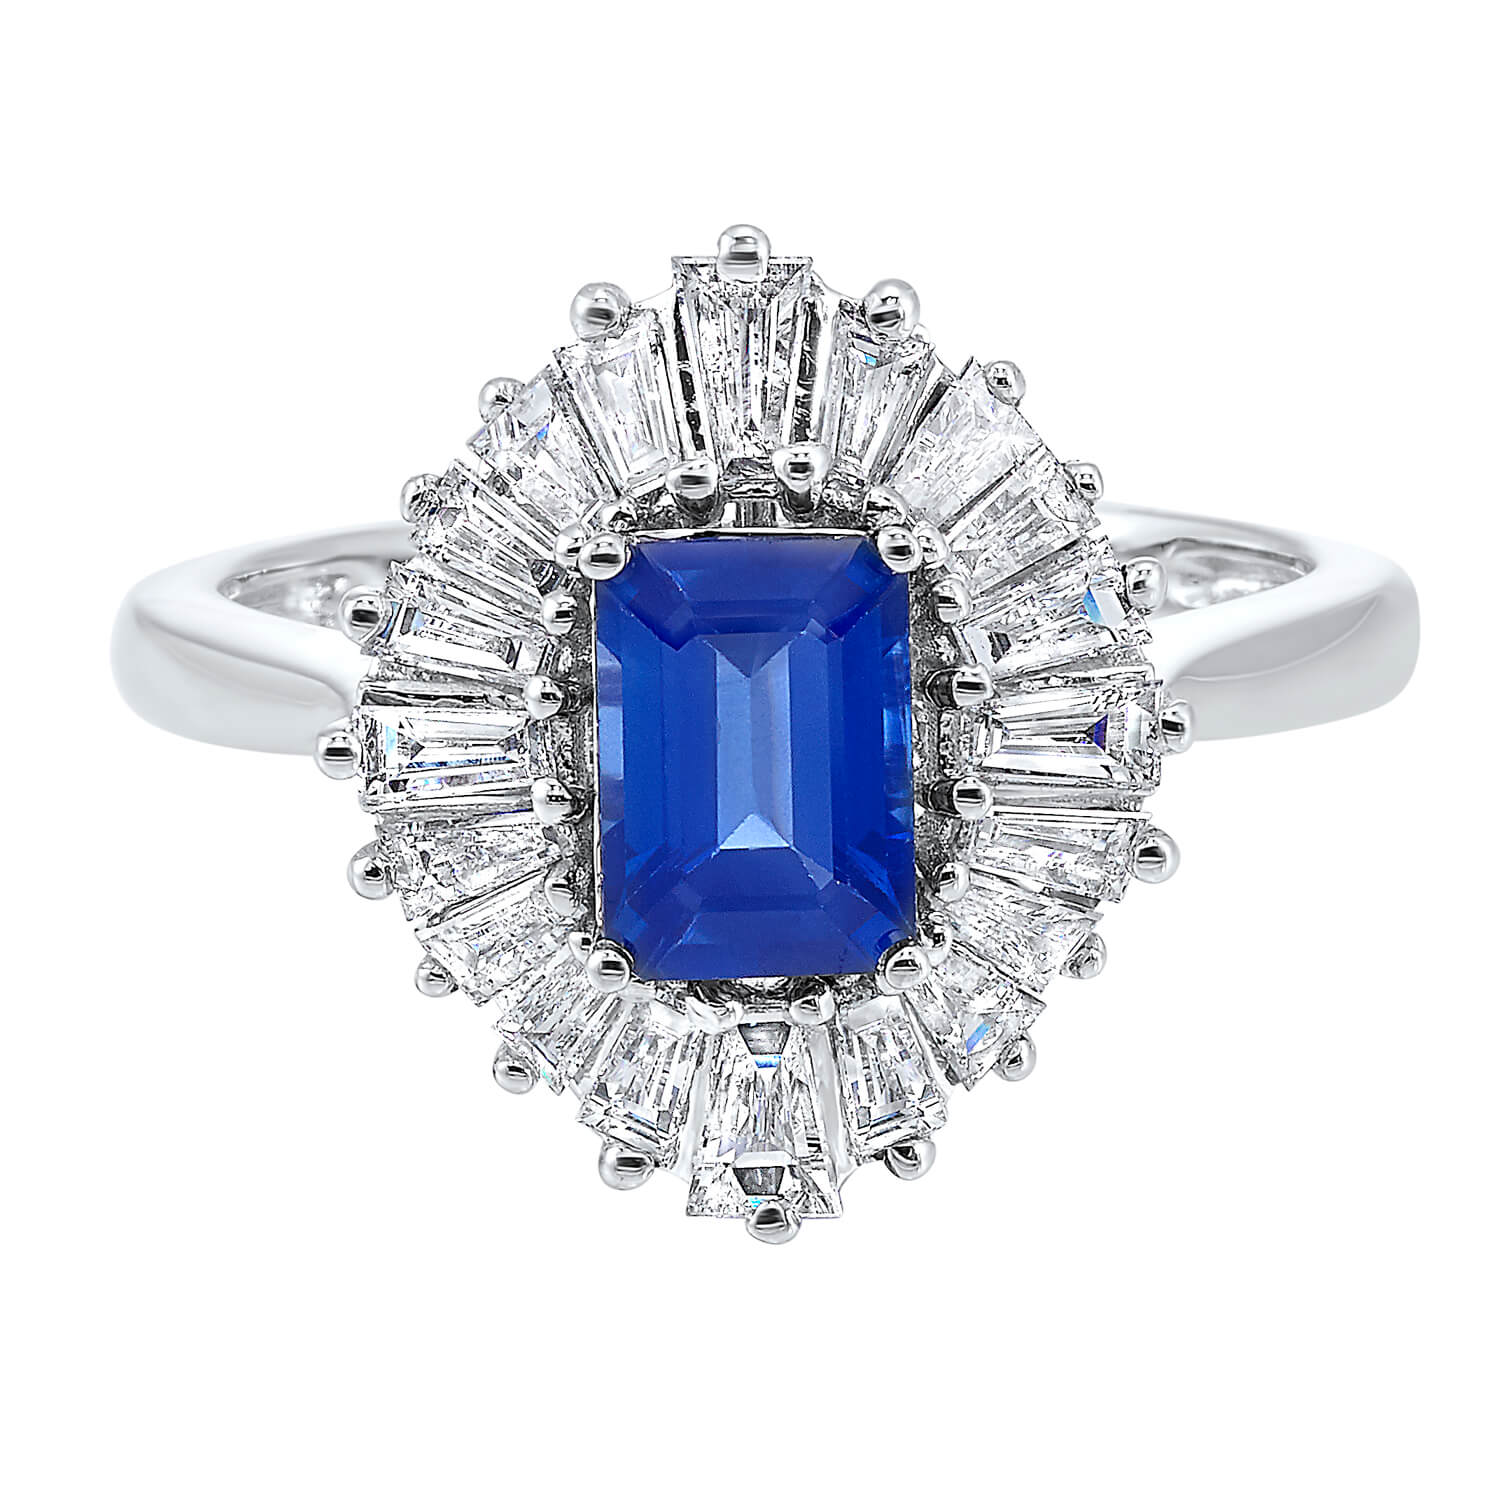 At søge tilflugt Lav et navn Nægte Sapphire & Diamond Ballerina Ring | Heiser's Jewelry